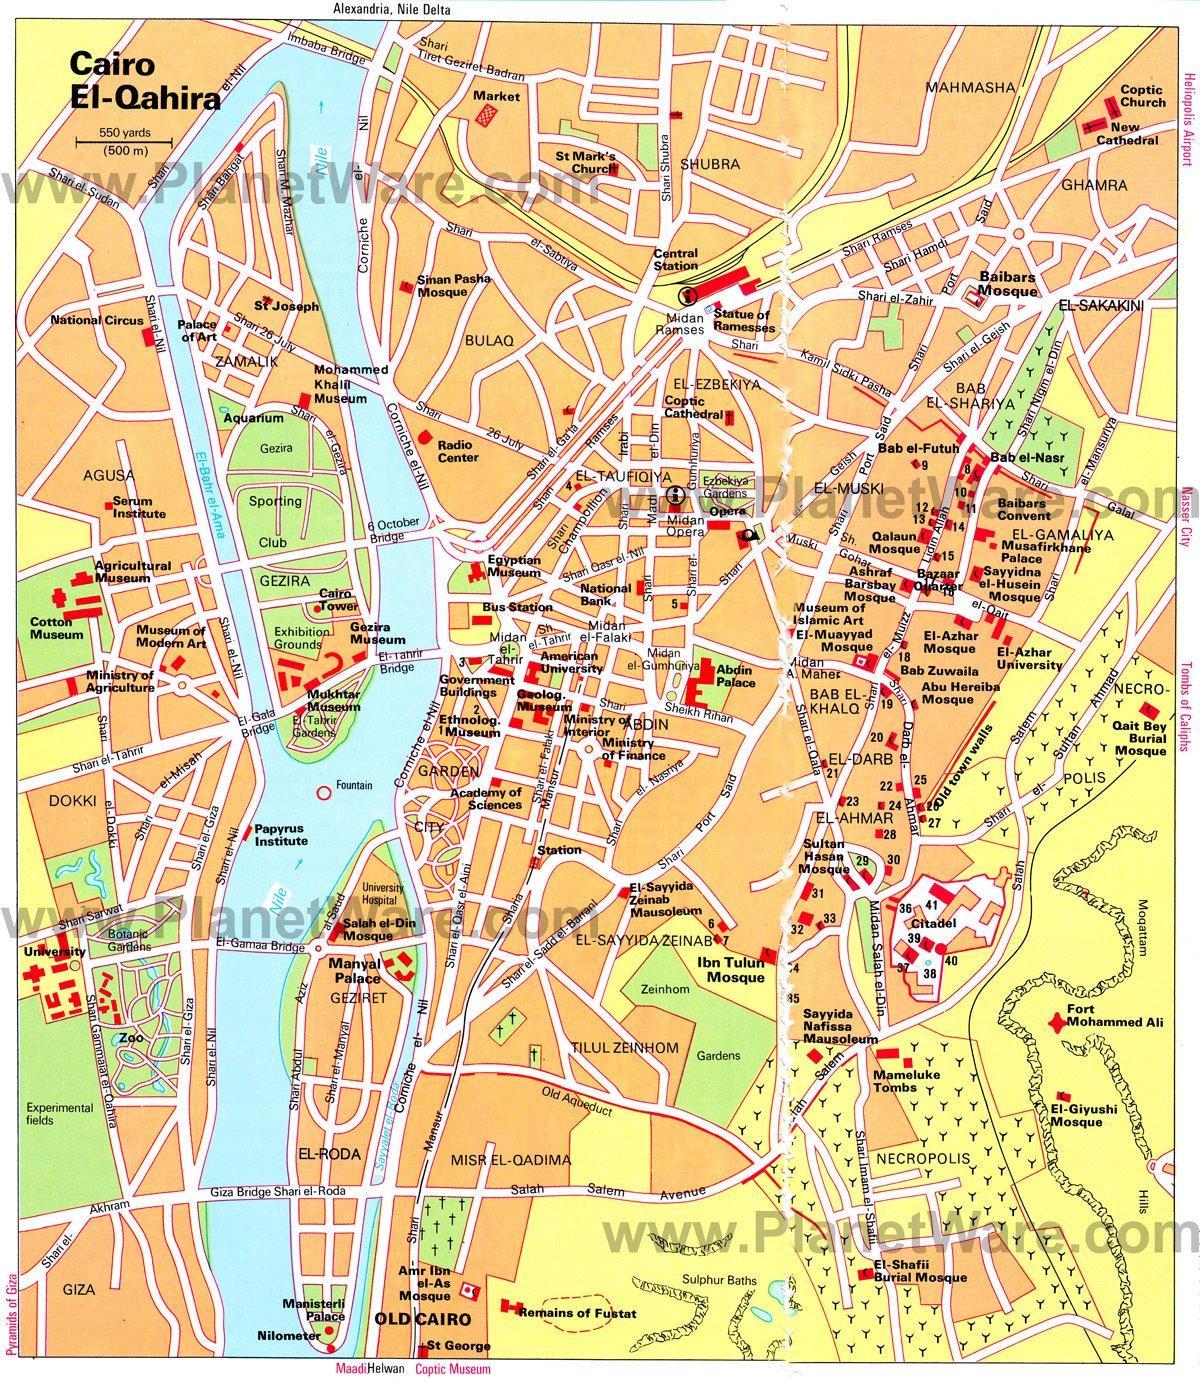 Cairo city center map